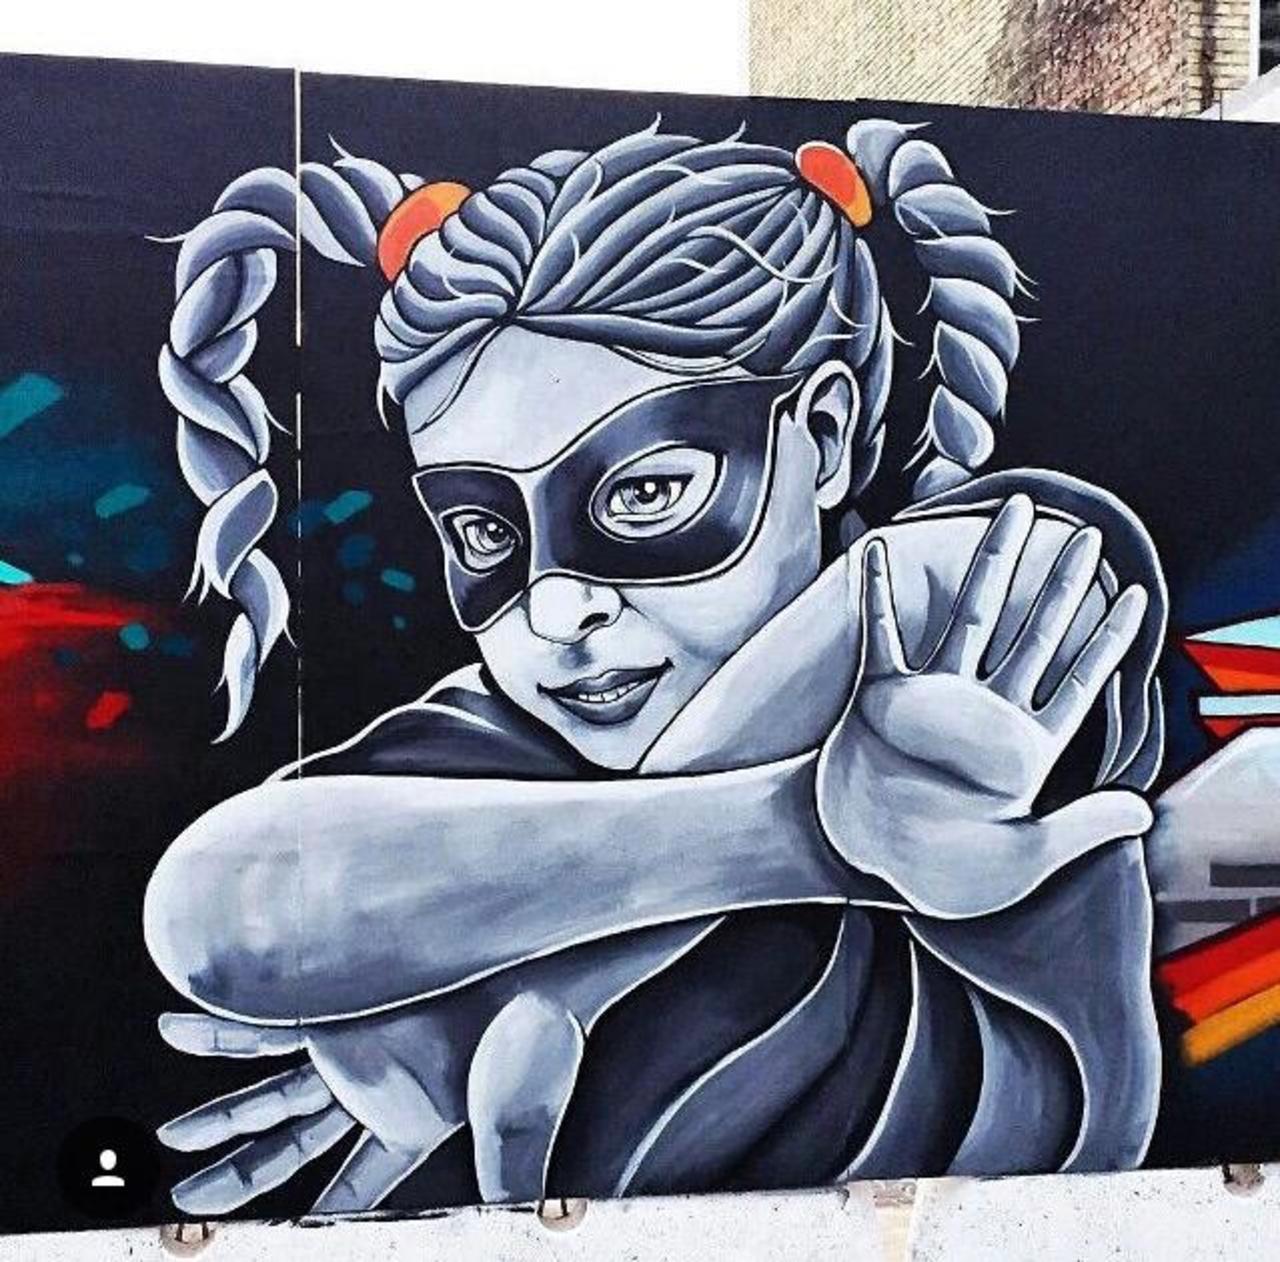 Street Art by Stinehvid 

#art #graffiti #mural #streetart http://t.co/chwDCl9Ing